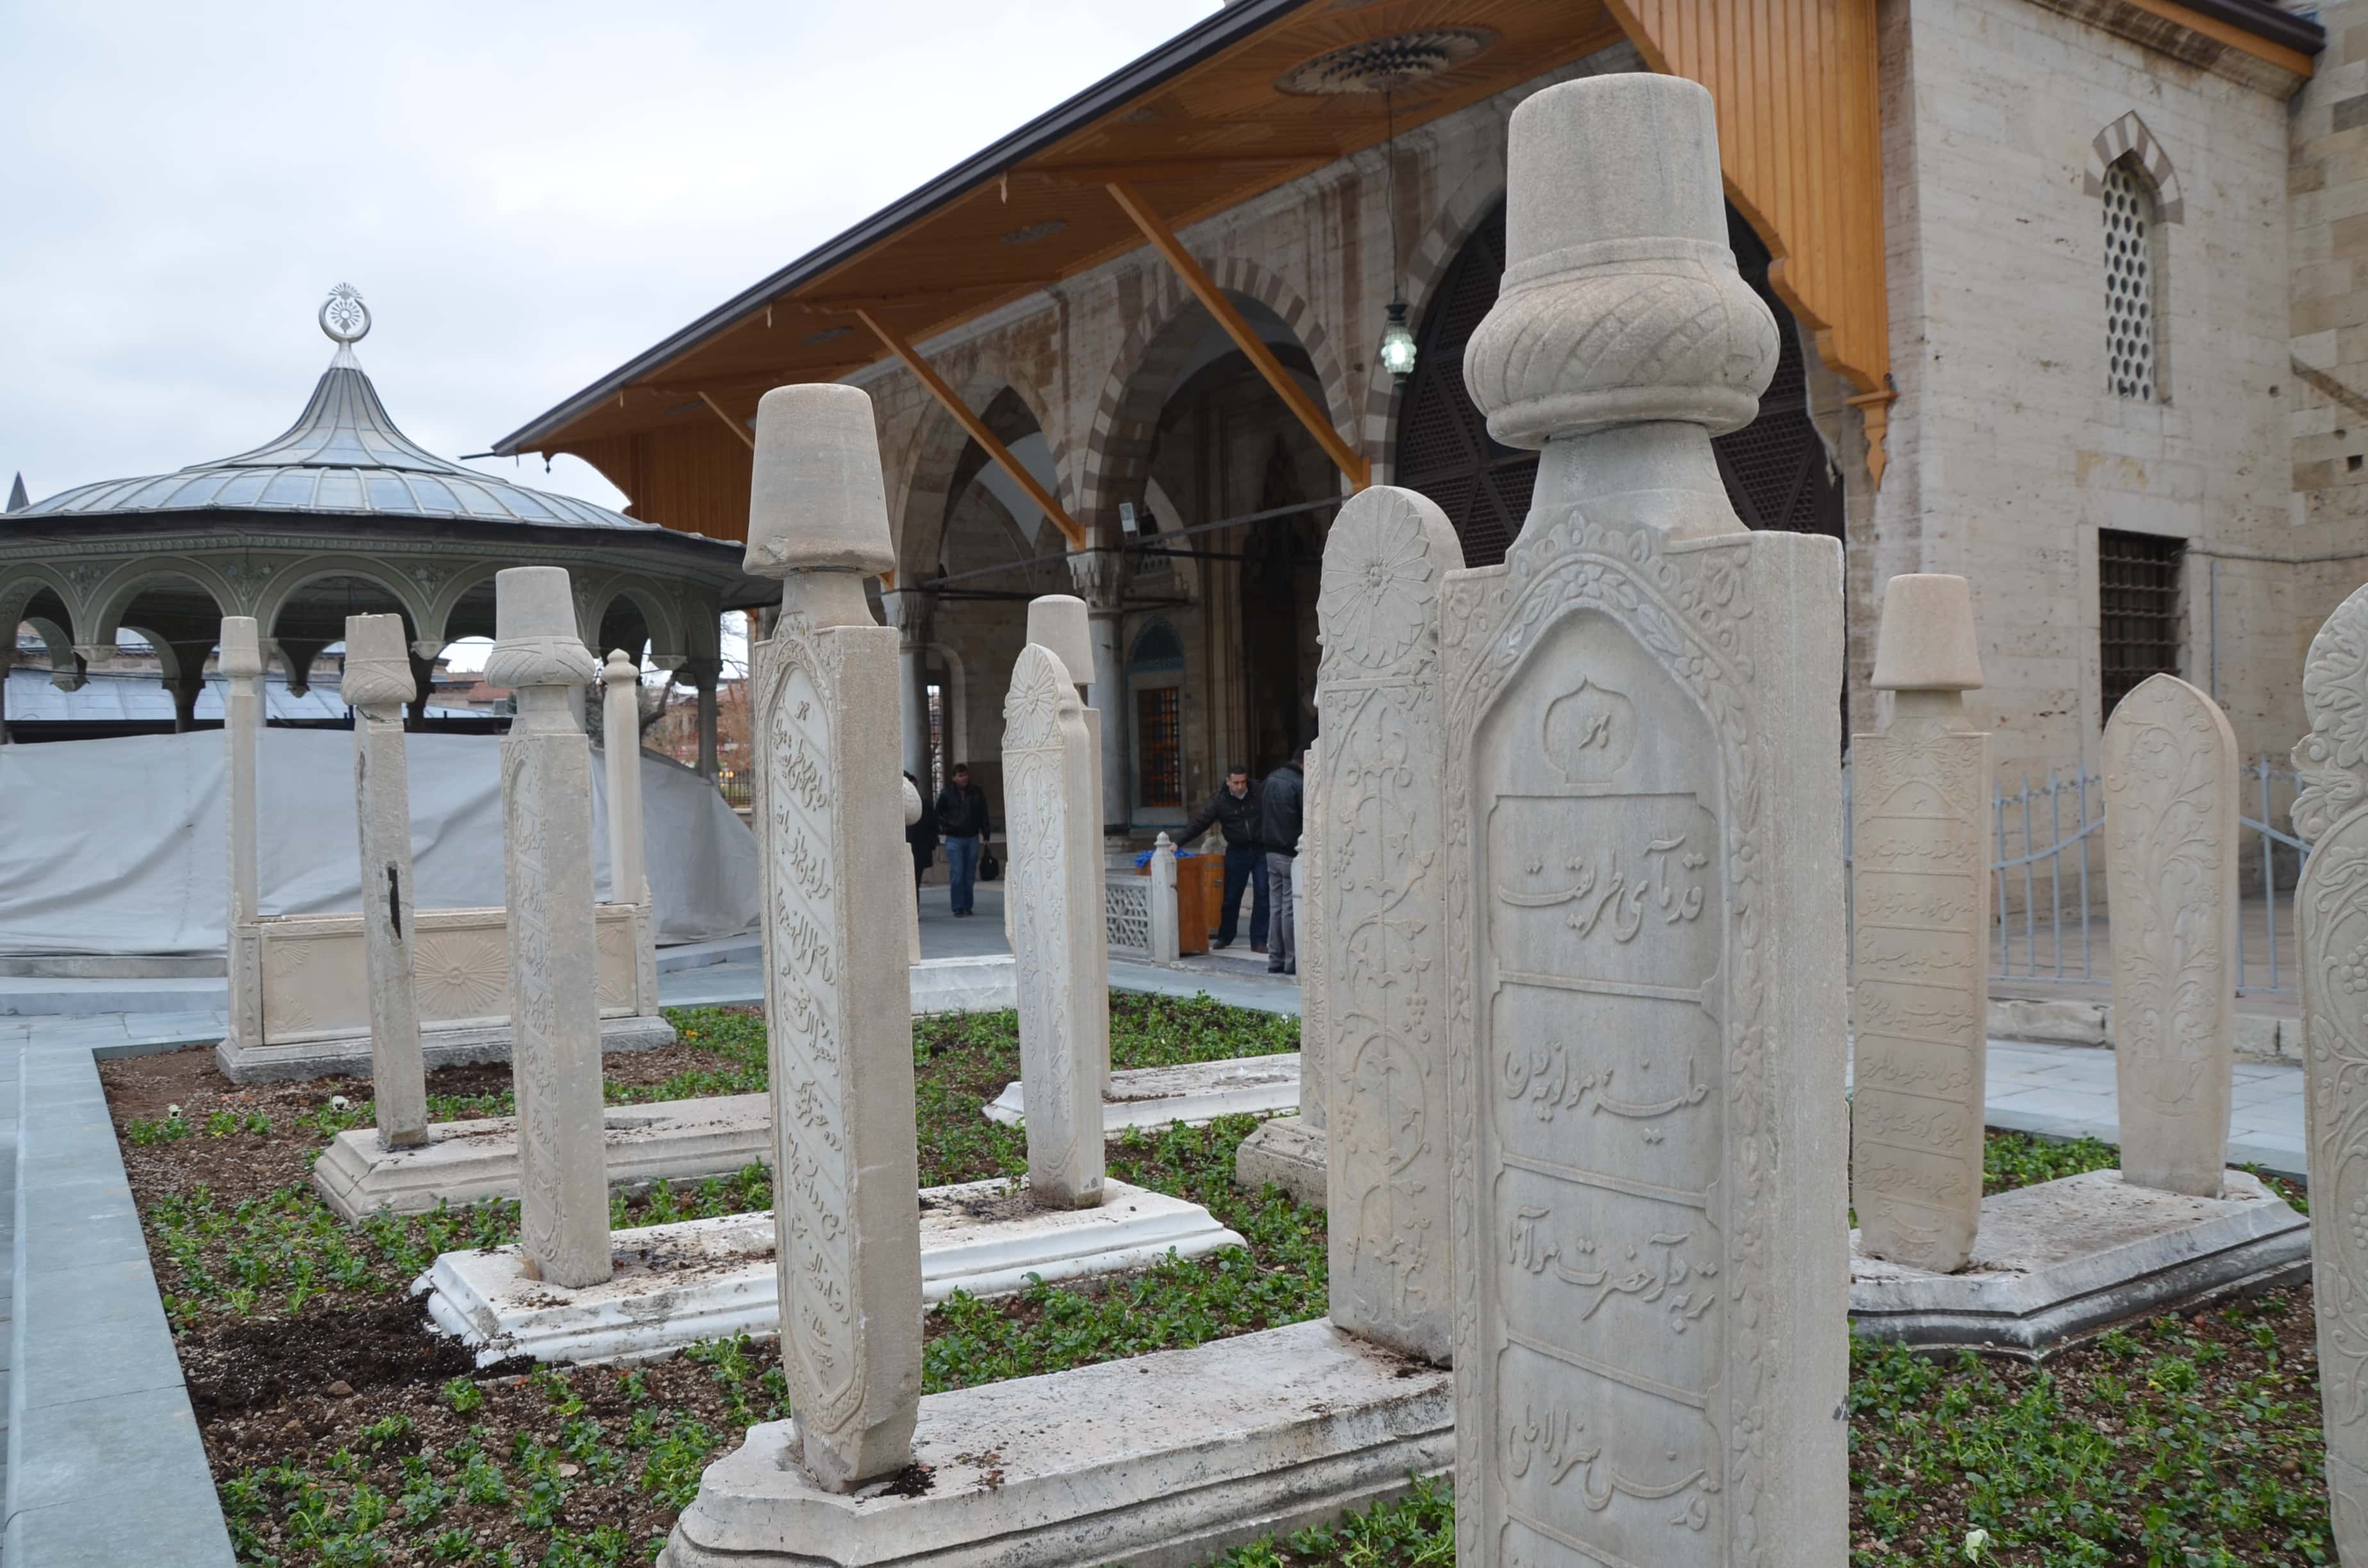 Ottoman tombs at the Mevlana Museum in Konya, Turkey